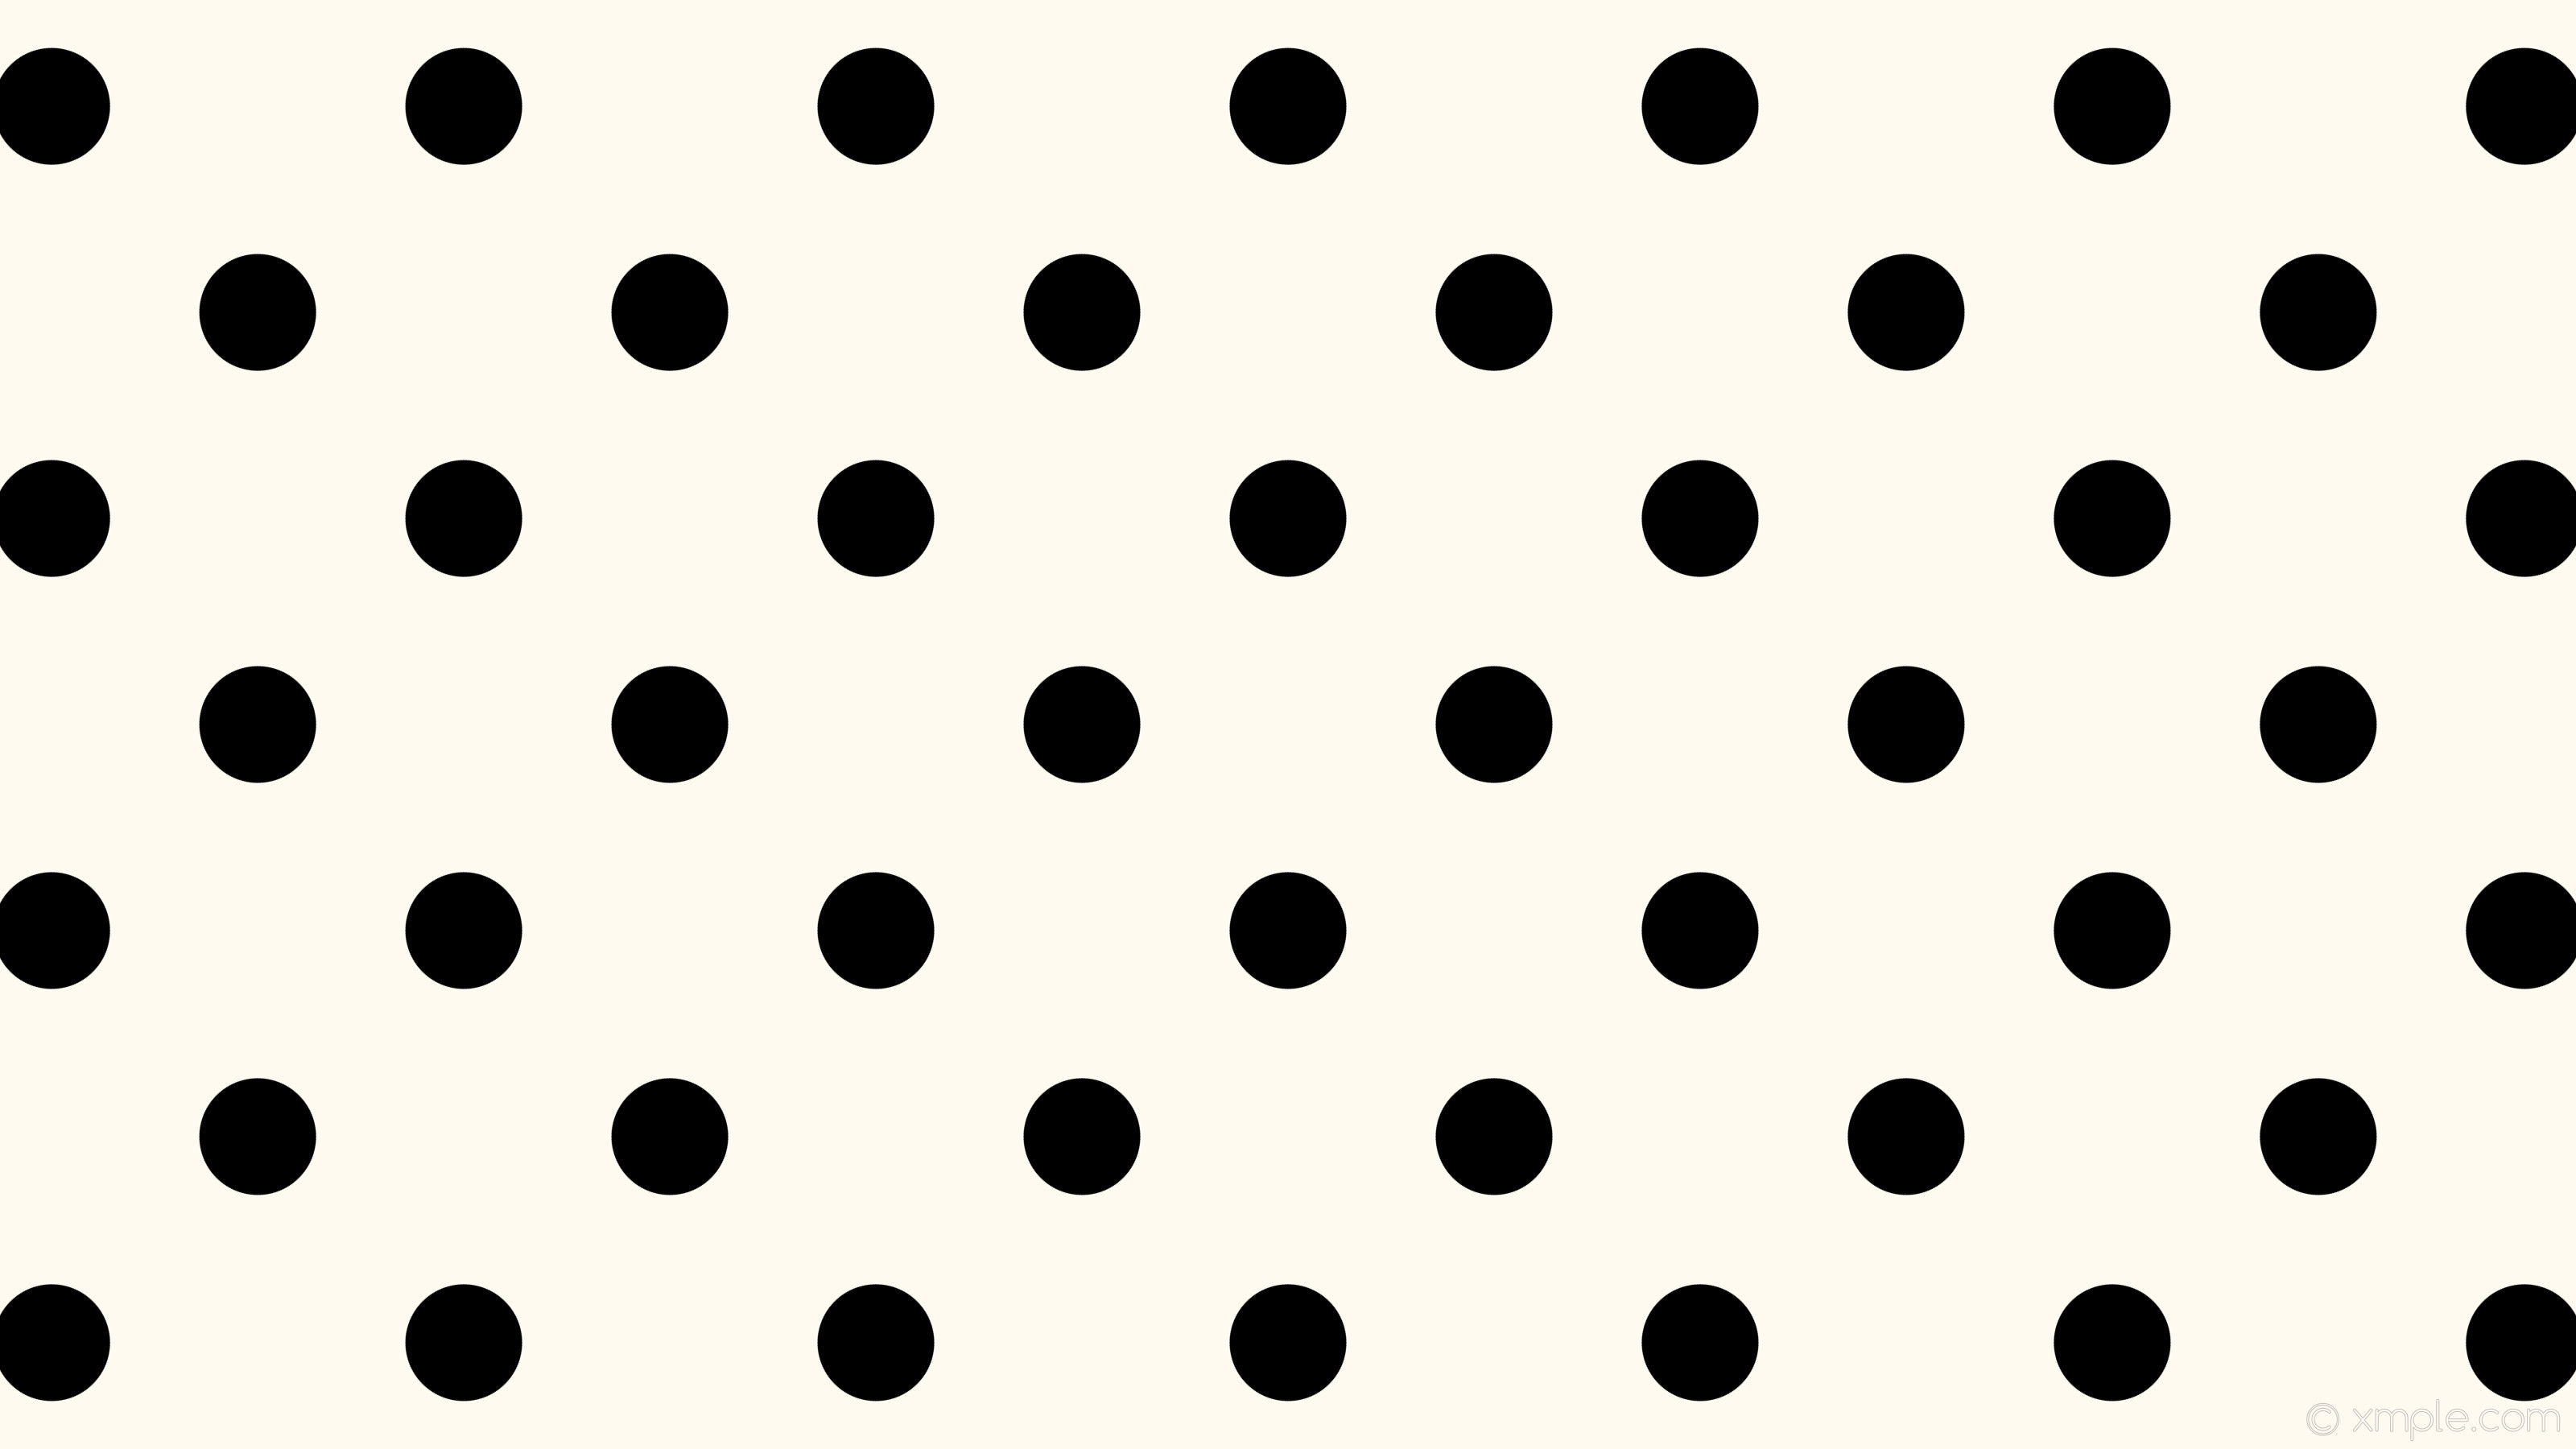 Free Image on Pixabay  Polka Dots Black White Spots  Polka dots  wallpaper Dots wallpaper Polka dots